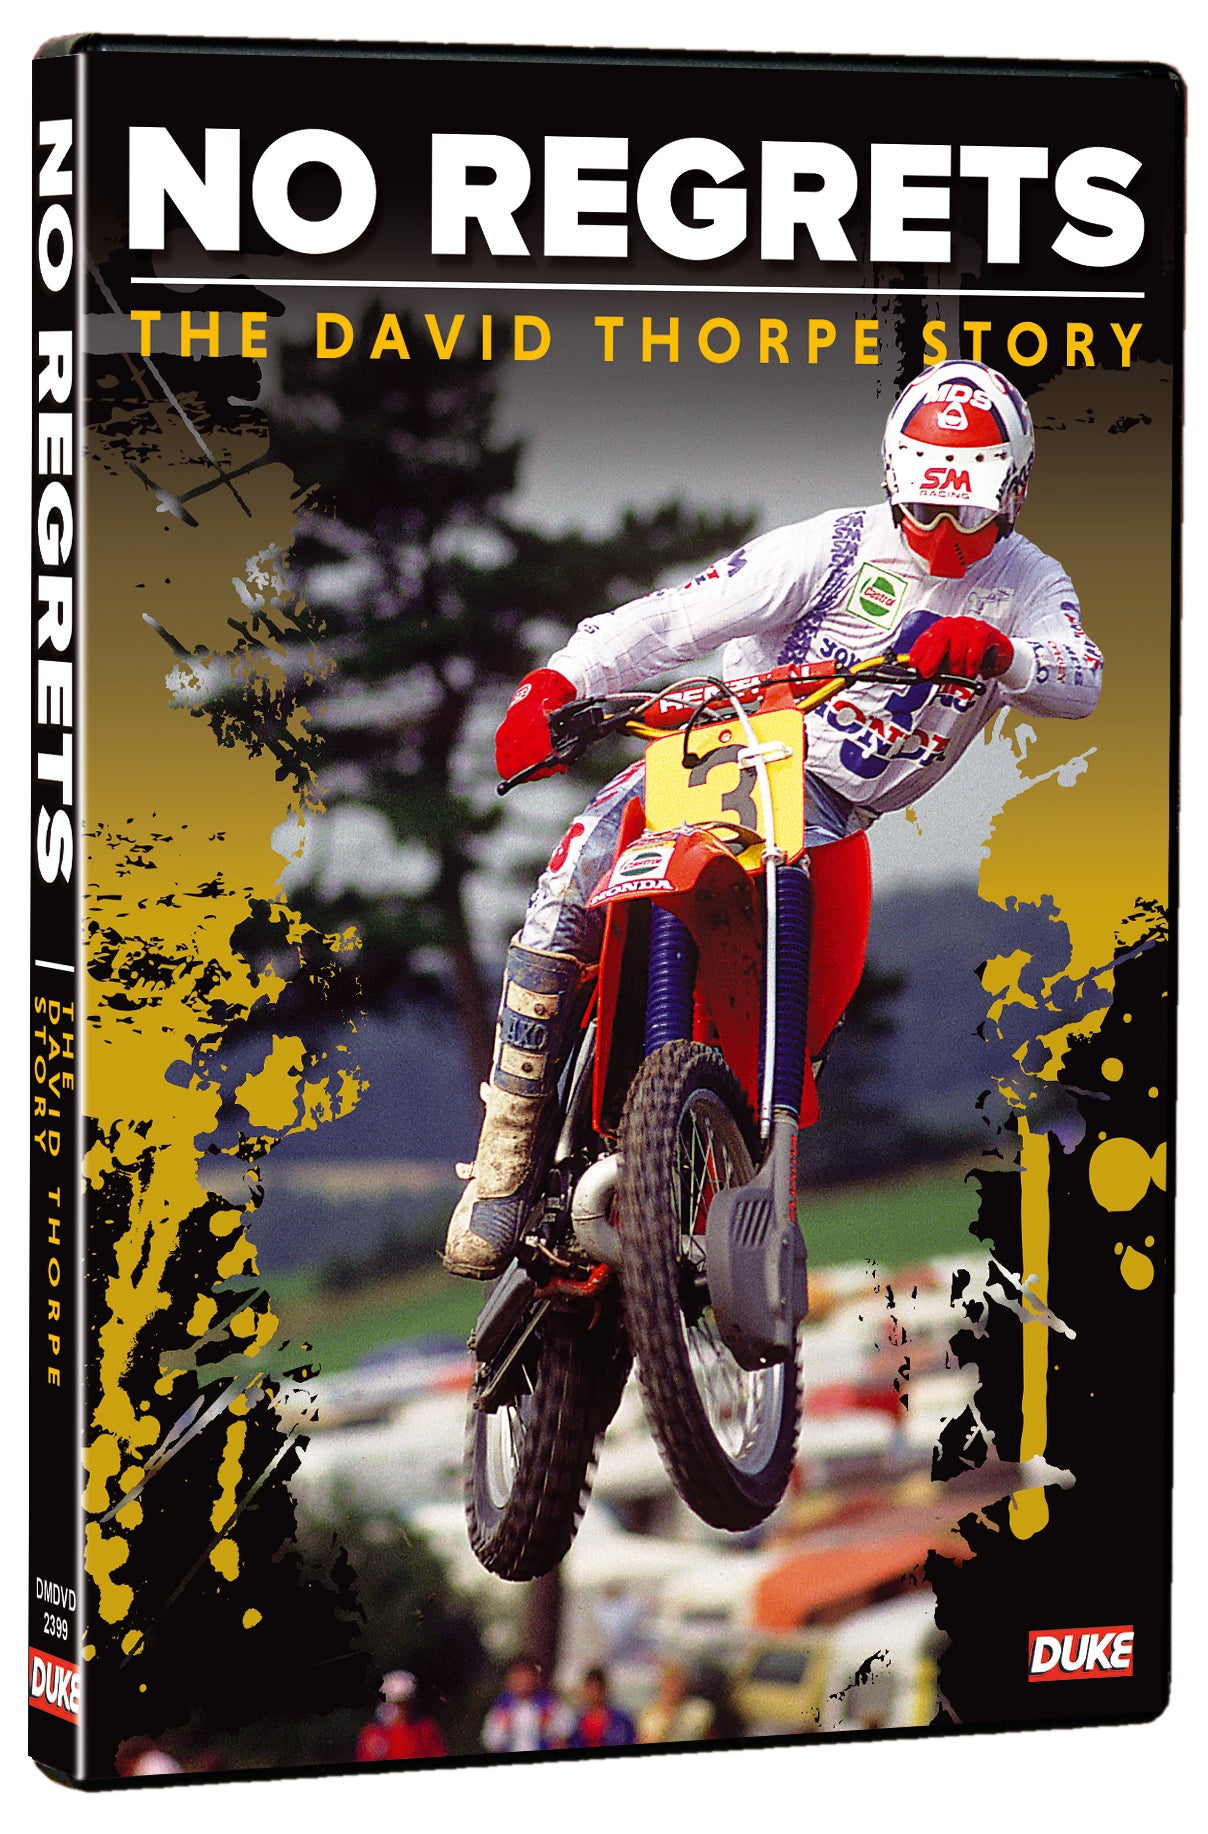 No Regrets The David Thorpe Story on DVD